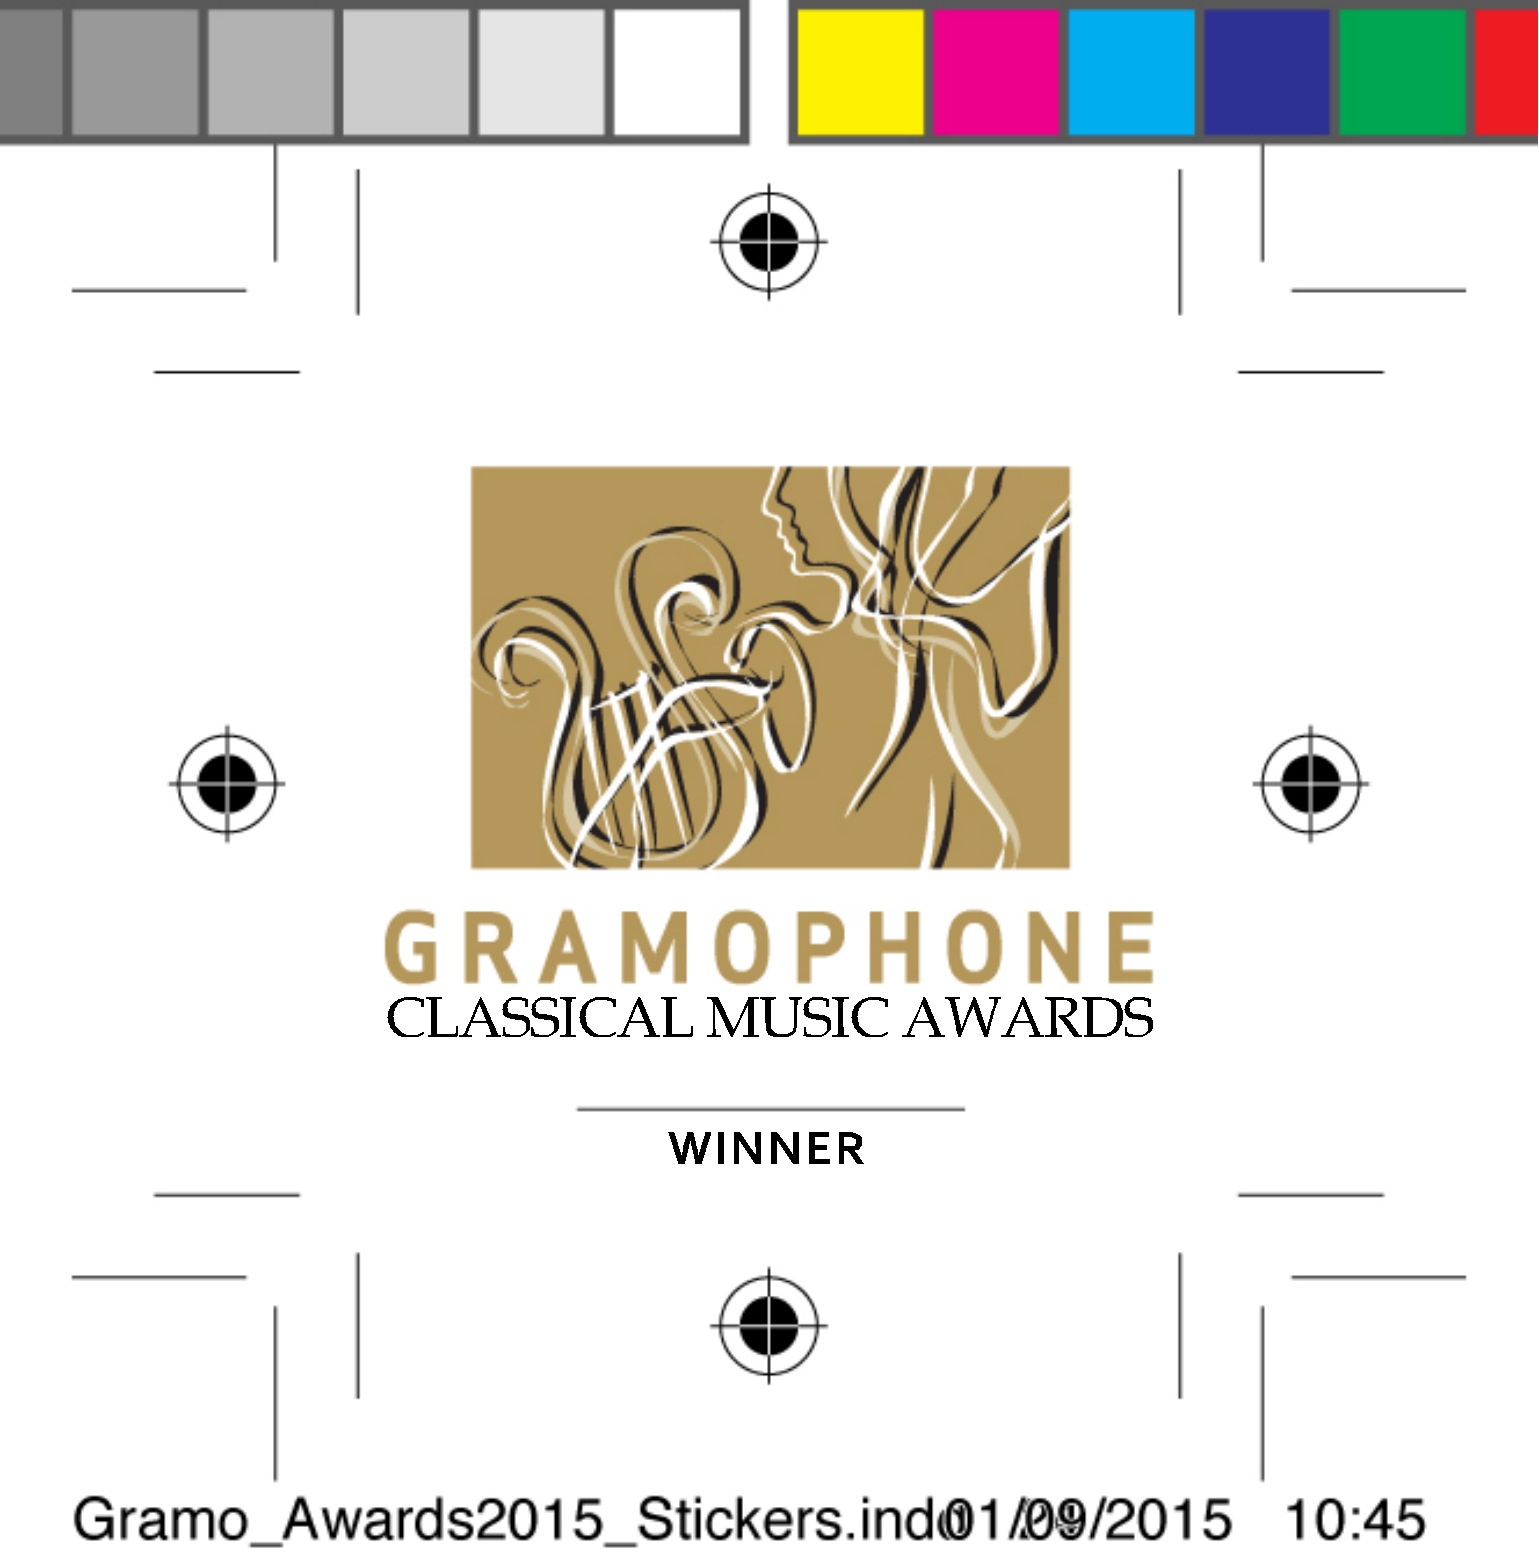 Gramophone: 'Beethoven 250 Award' (October, 2020)